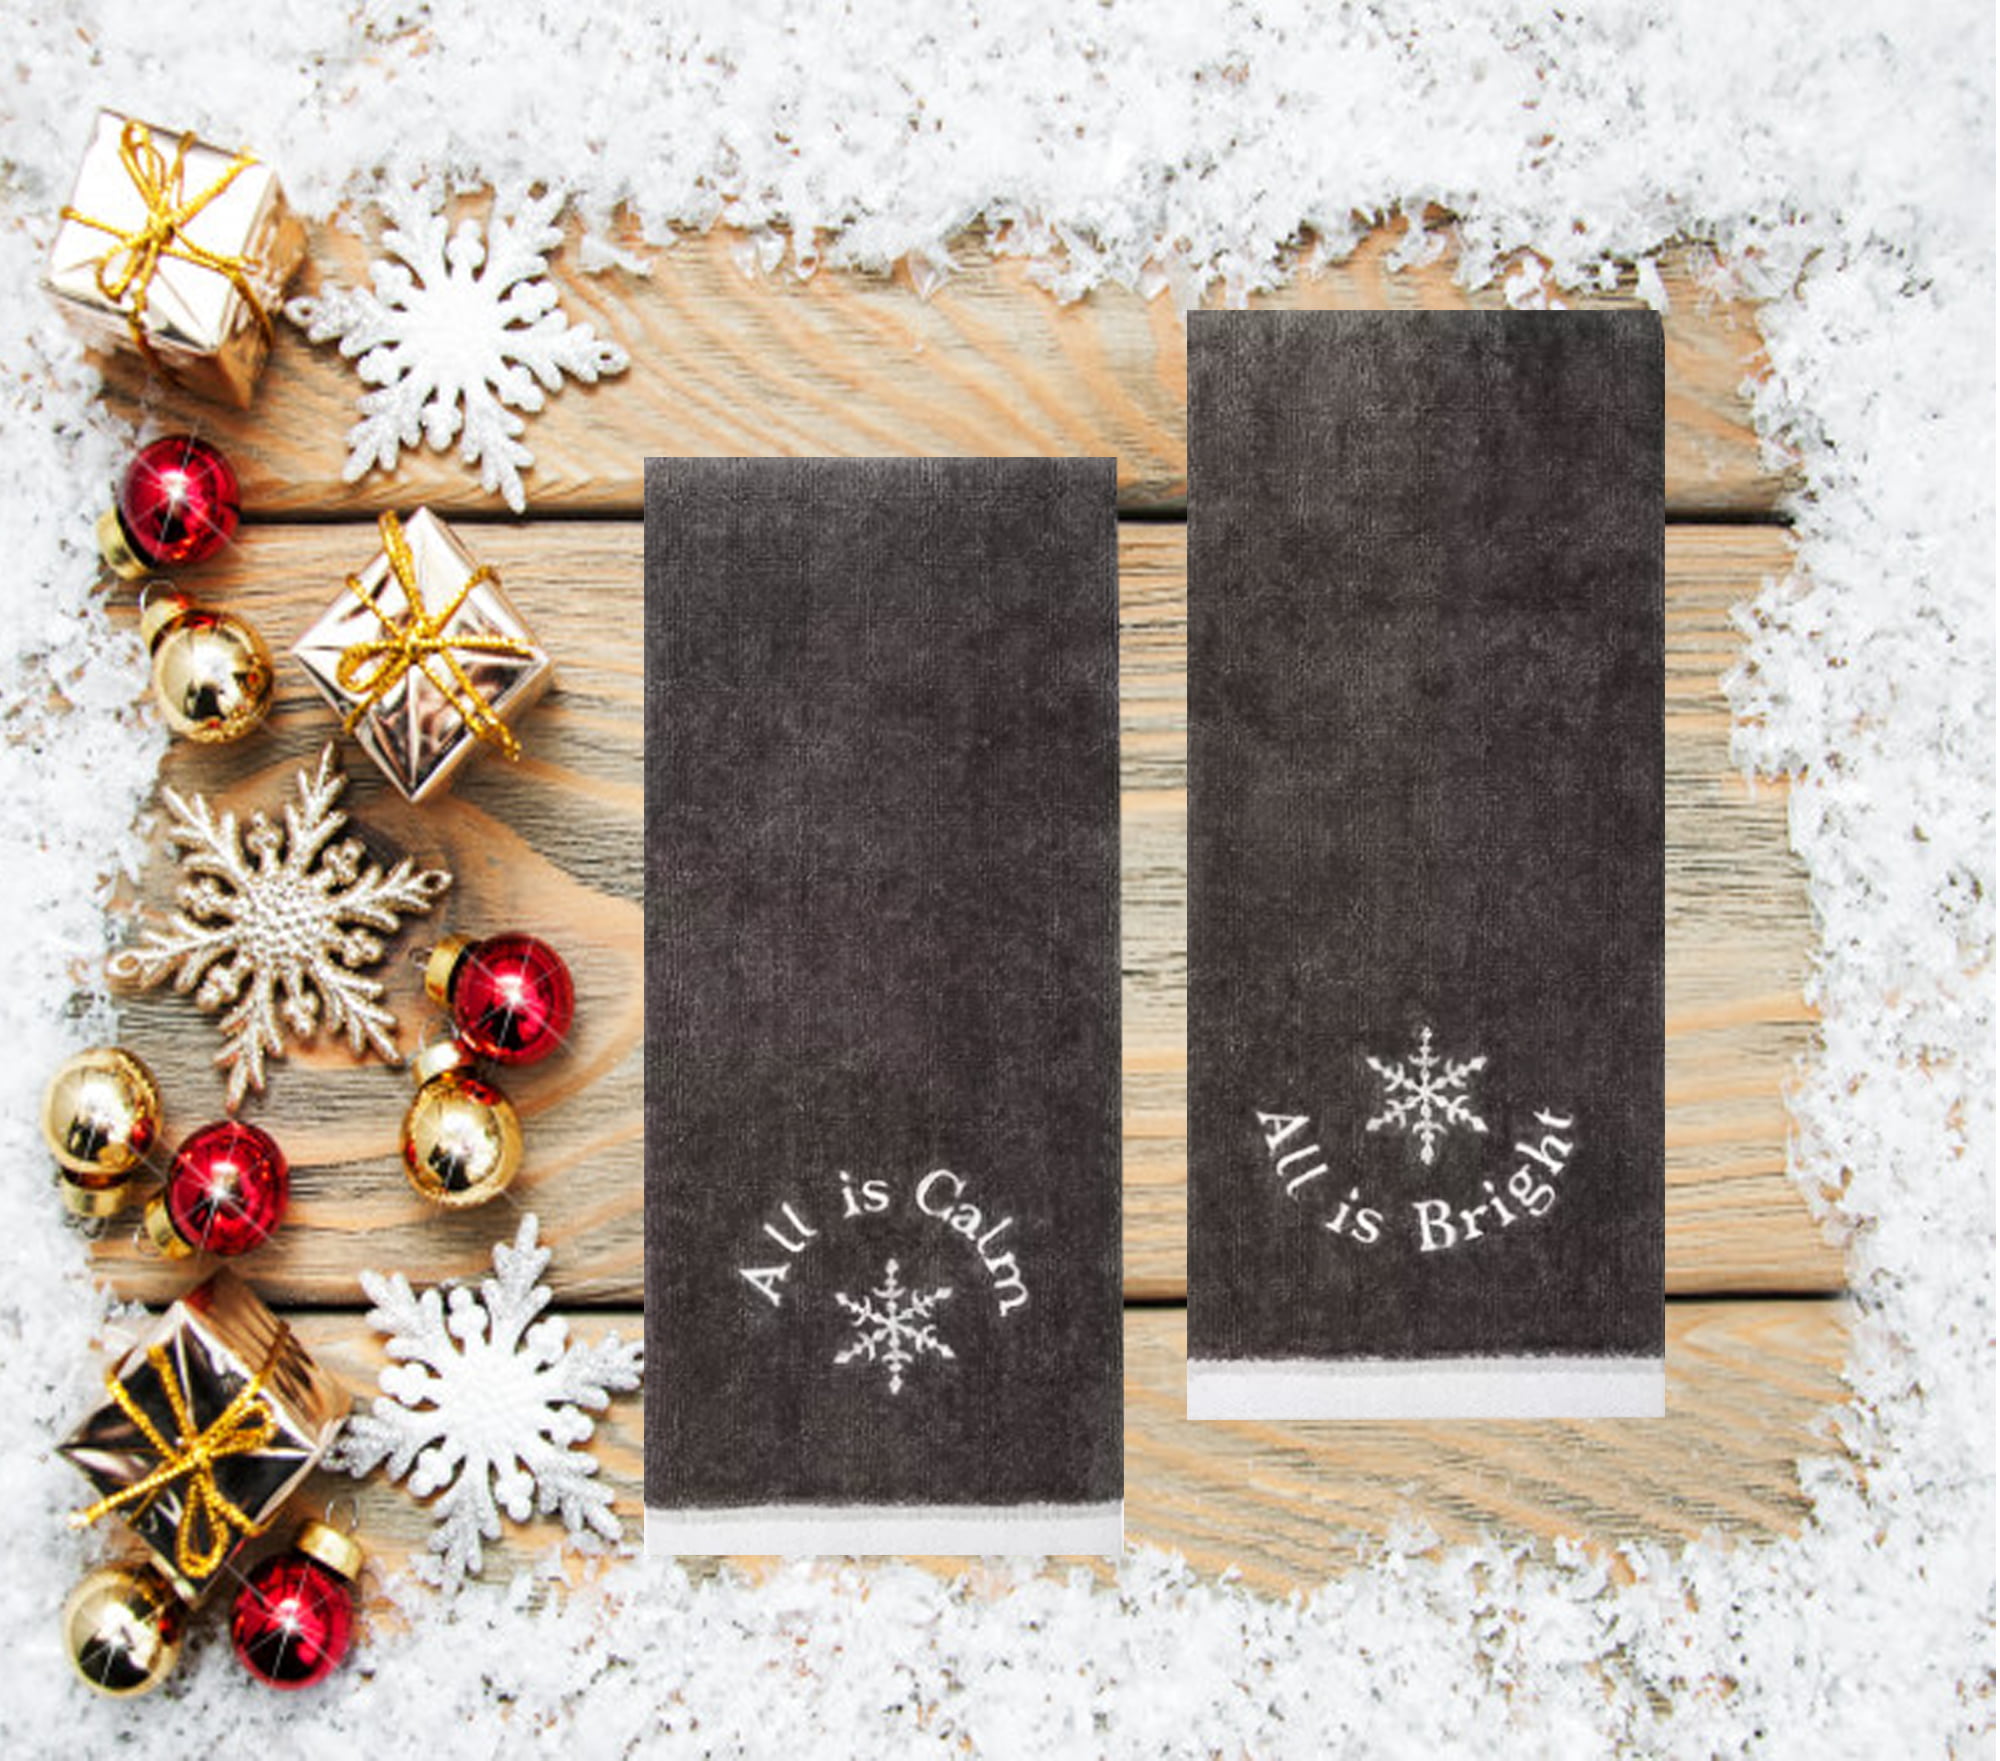 Decorative Towel All Is Calm Set/2 Cotton Kitchen Christmas Retro